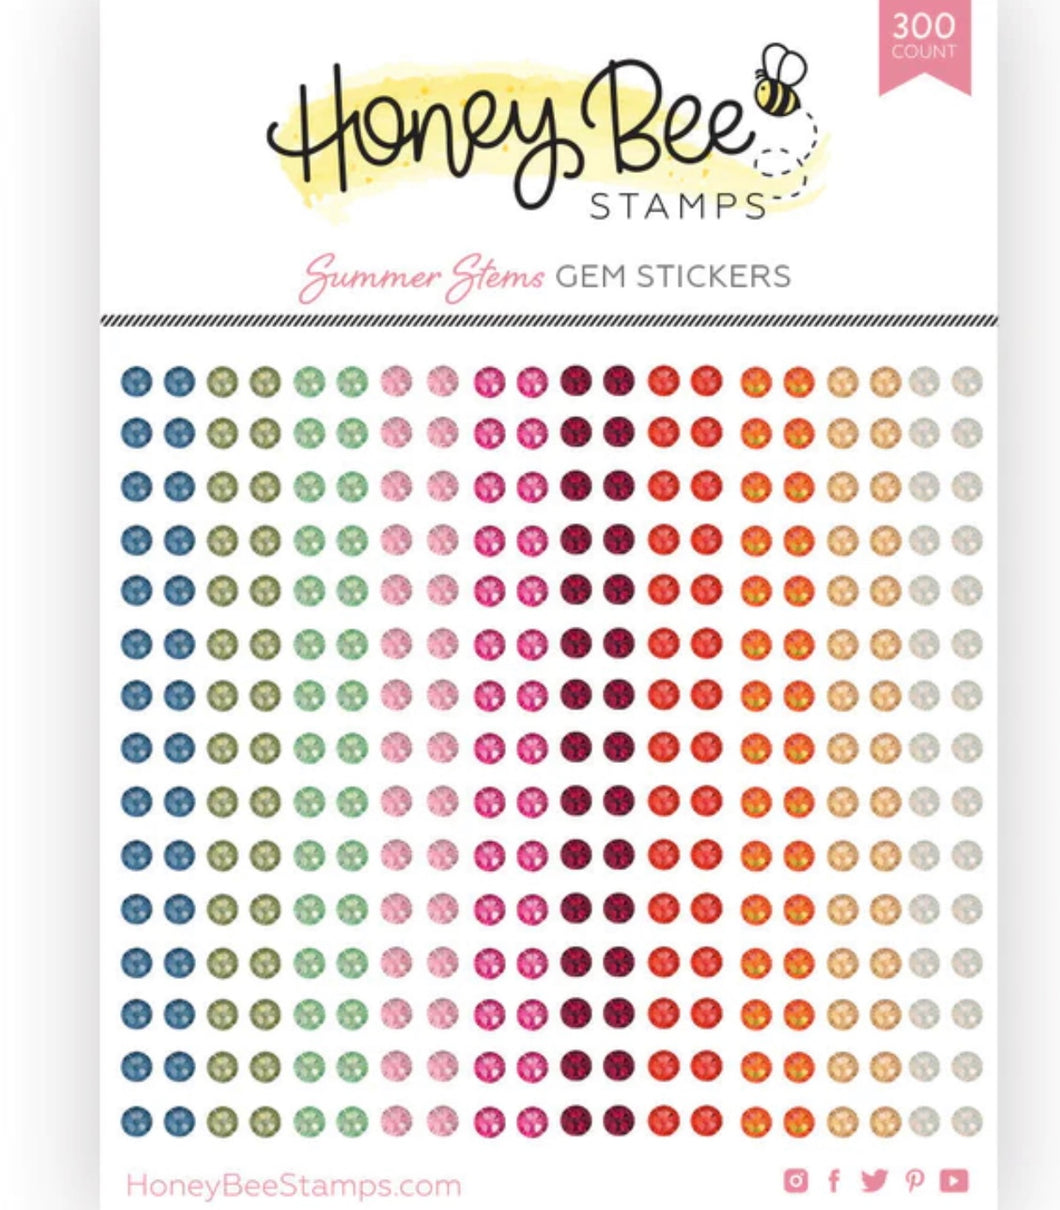 Embellishments: HoneyBee Stamps-Gem Stickers 300 Count - Summer Stems